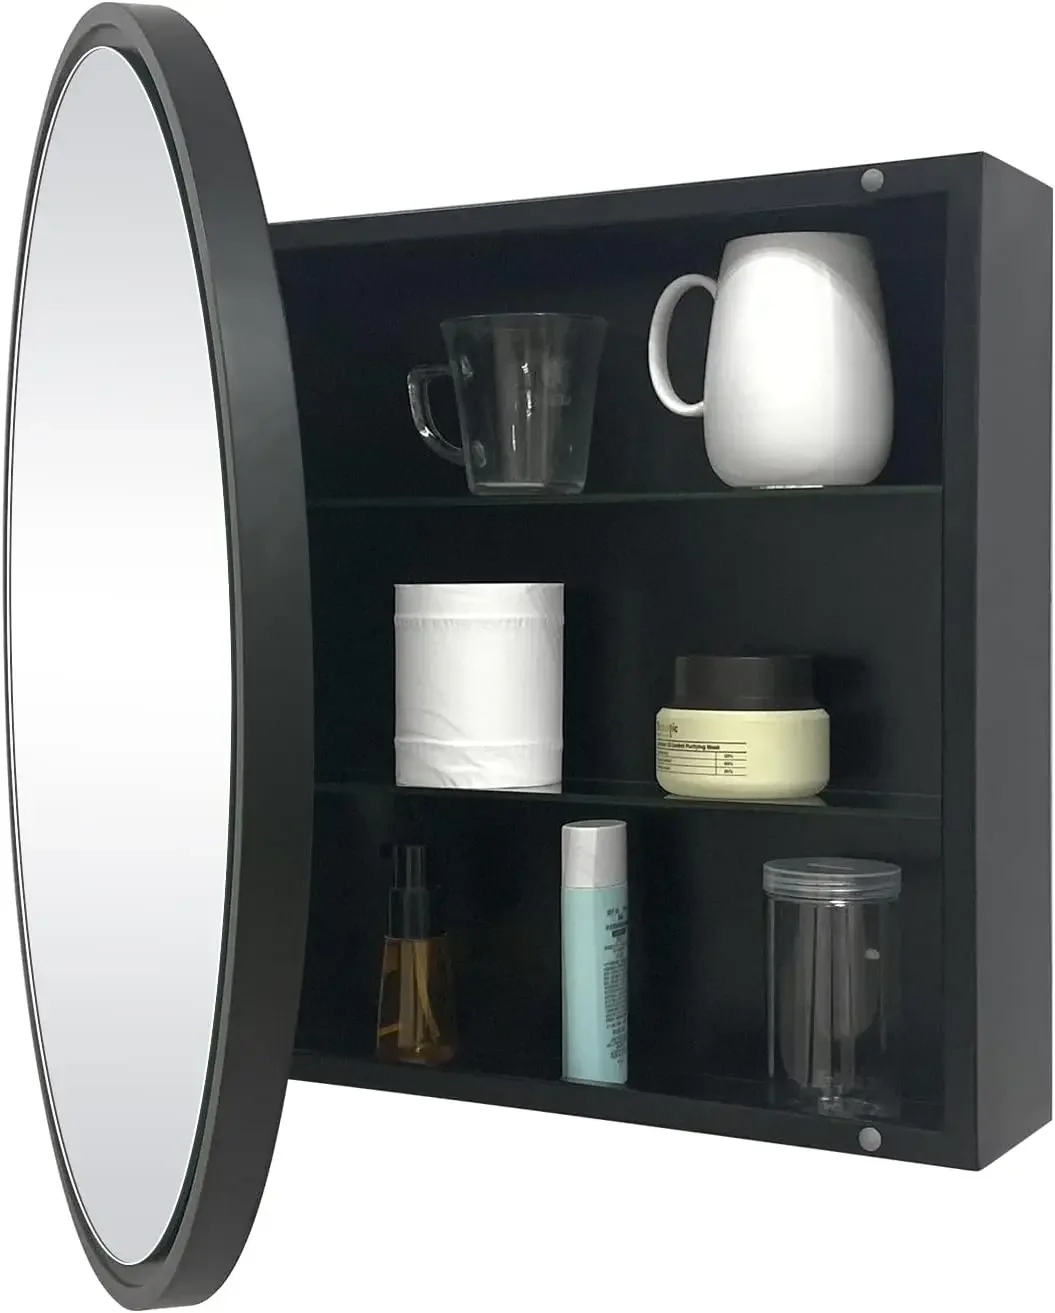 

FOAMYKO 28 Inch x 28 Inch Round Medicine Cabinet, Circular Bathroom Mirror Cabinet, Wall Surface Mounted Storage Farmhouse Ca